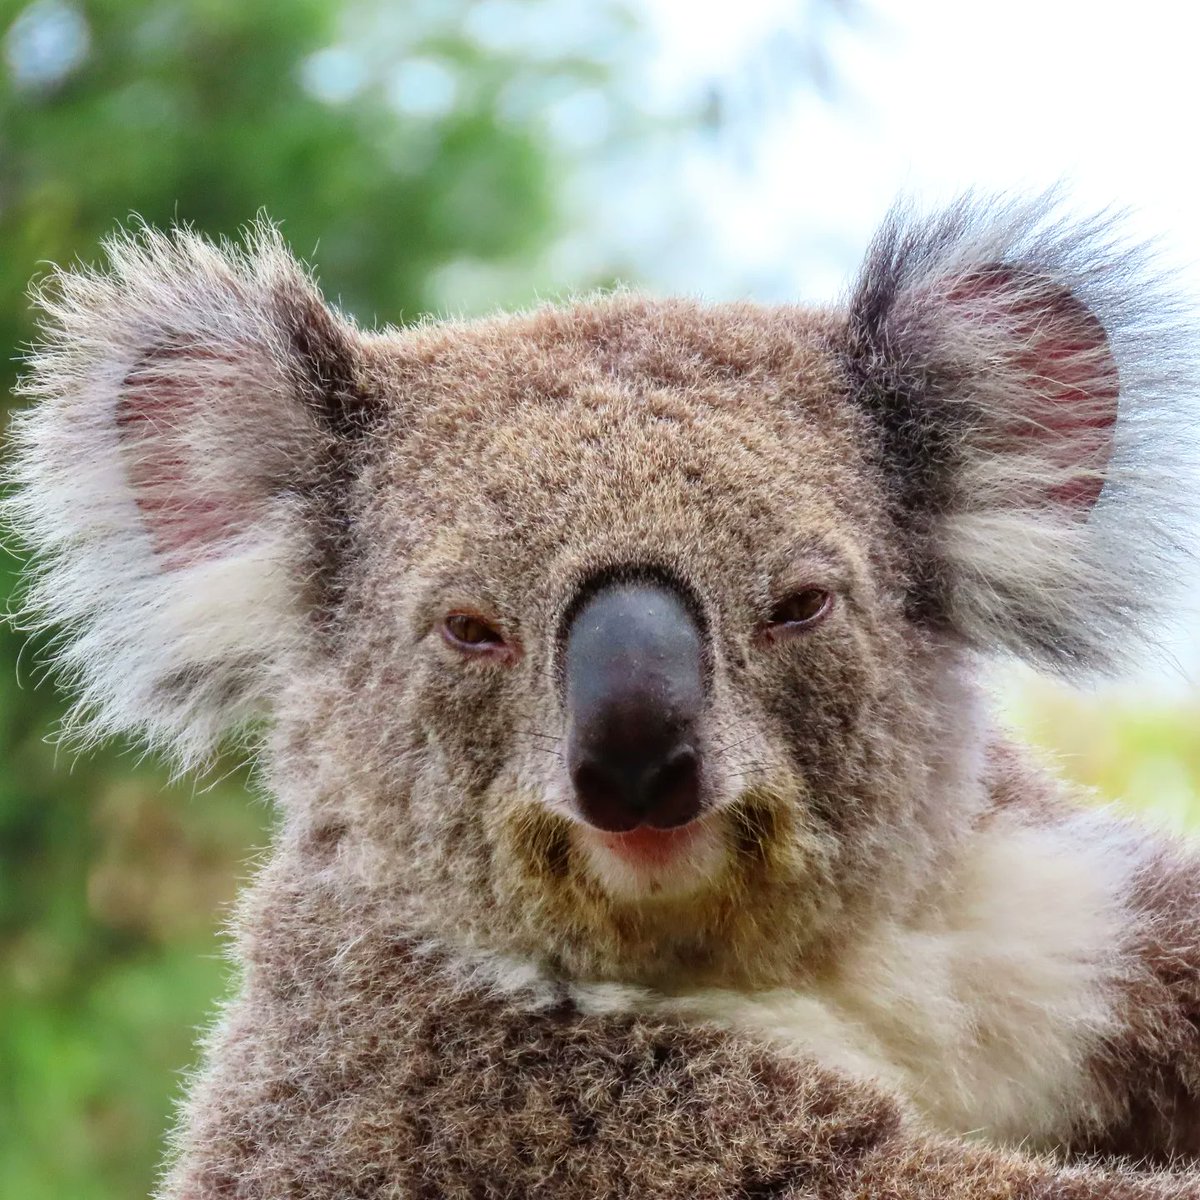 How cute... Koala in Sydney Zoo today. Meeting our hearts. #norouteexplore #worldtravellers #sydney #koala